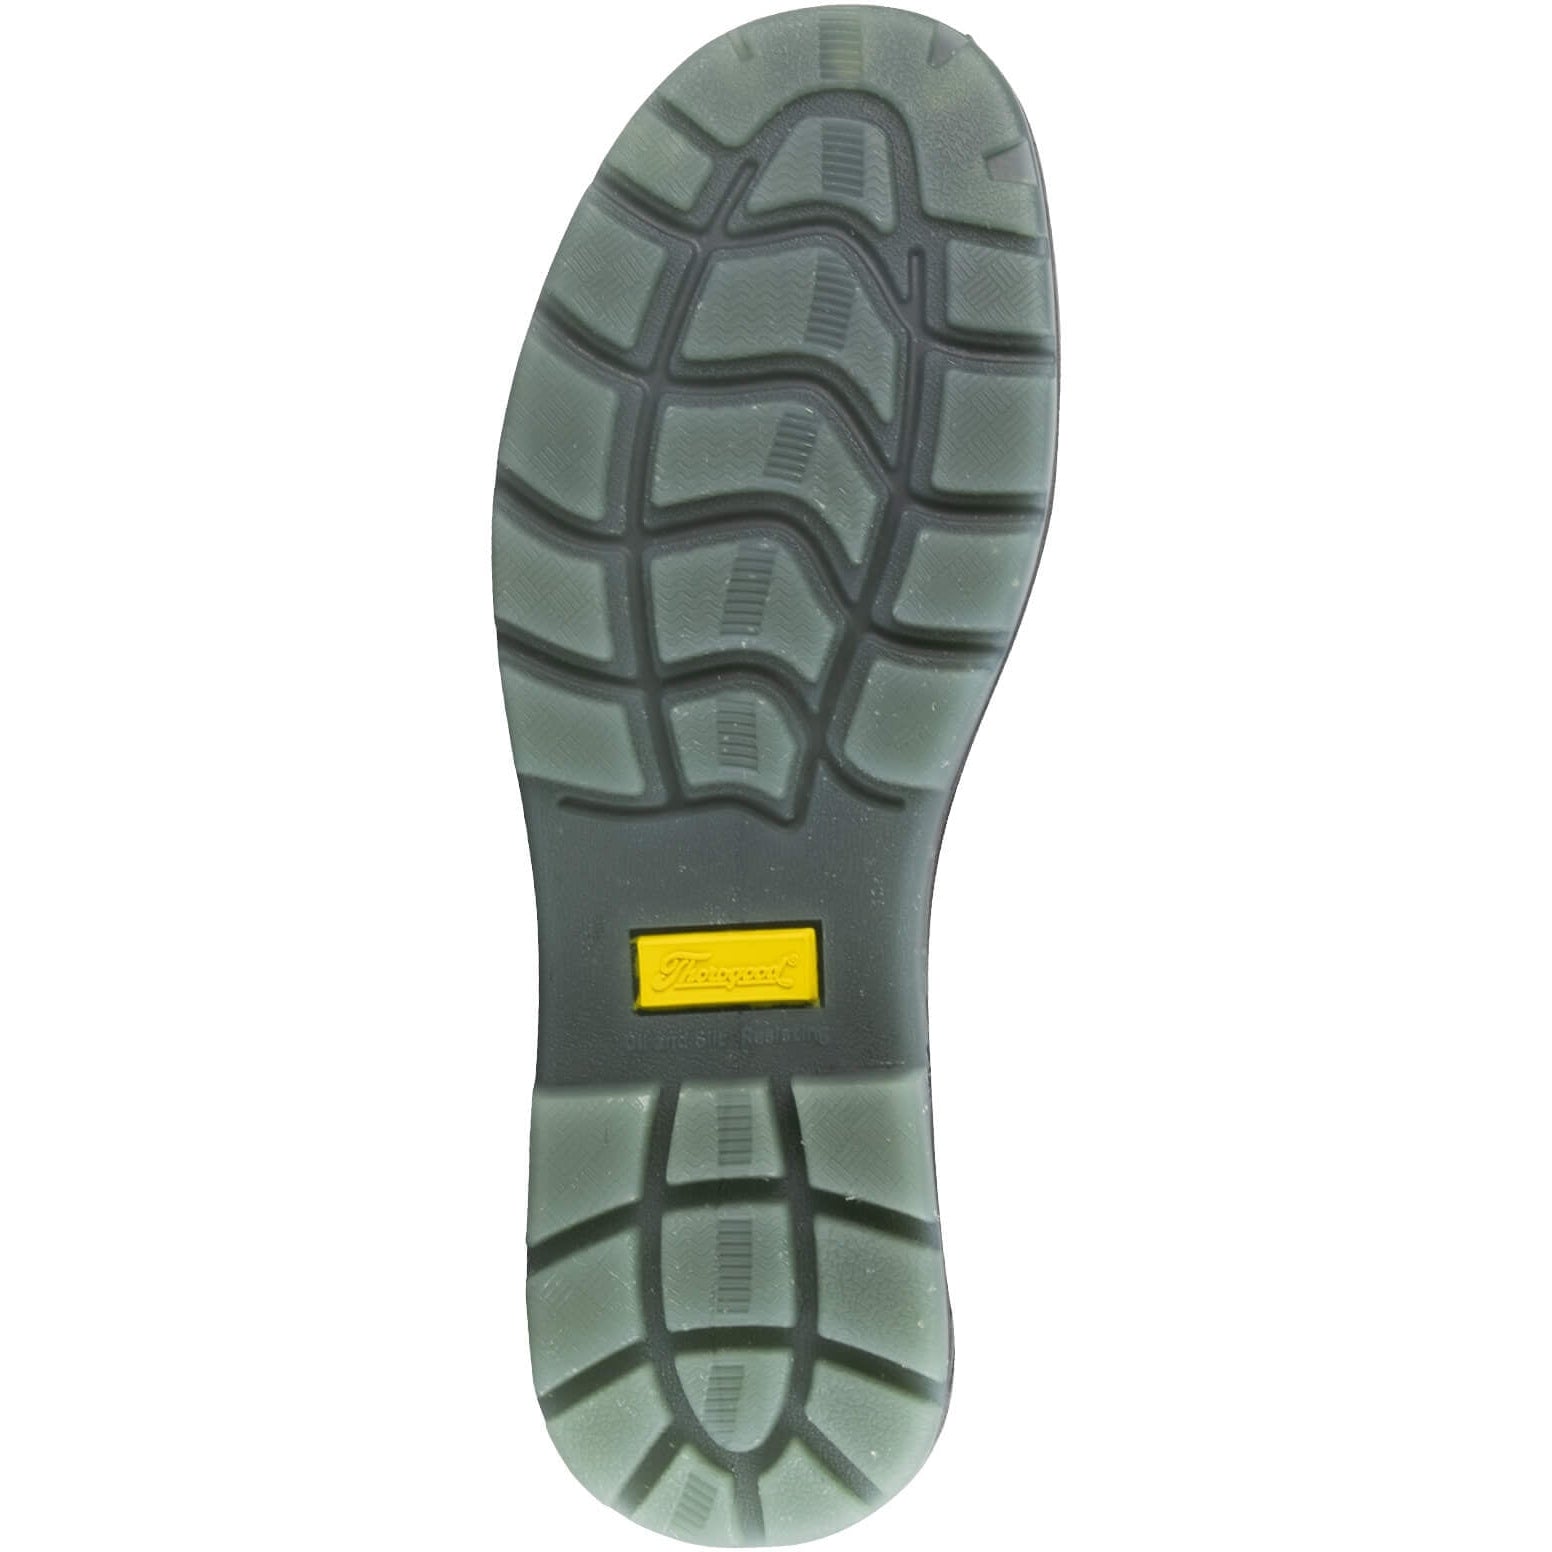 Thorogood Dual Gender Thoro-Flex Slip-On 10" WP Shoe- Black - 834-6136  - Overlook Boots